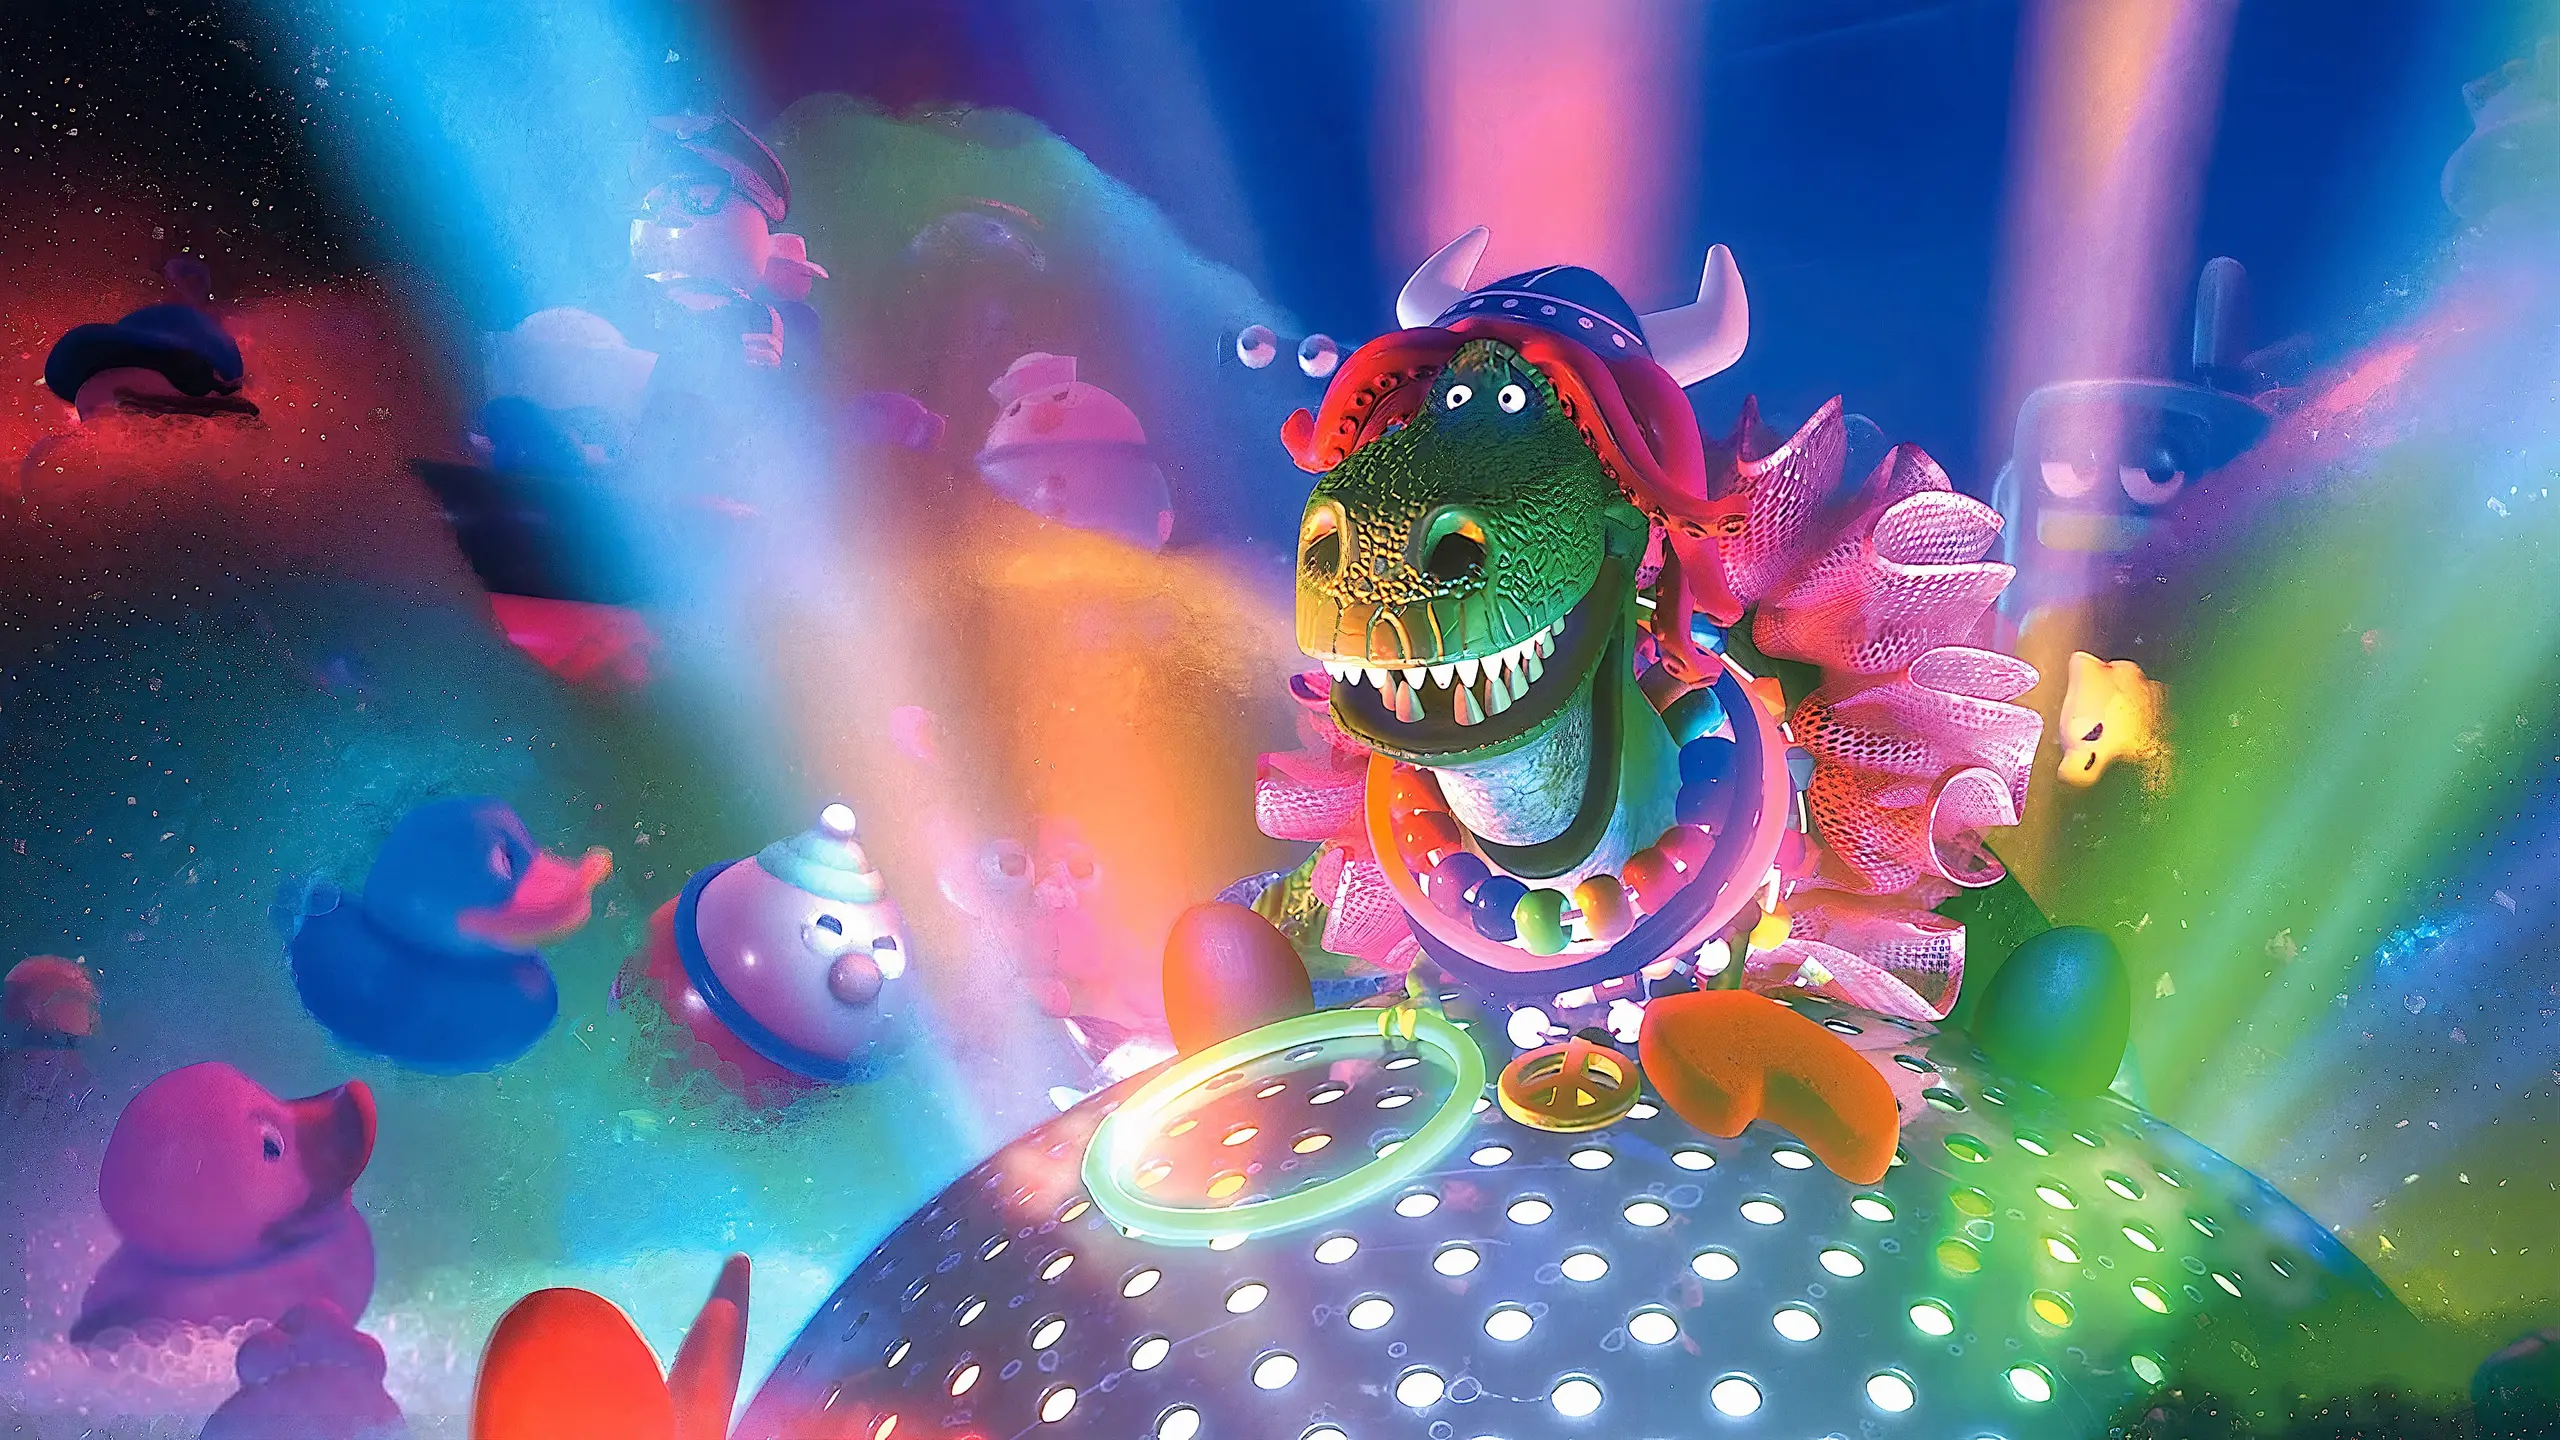 Toy Story Toons - Partysaurus Rex